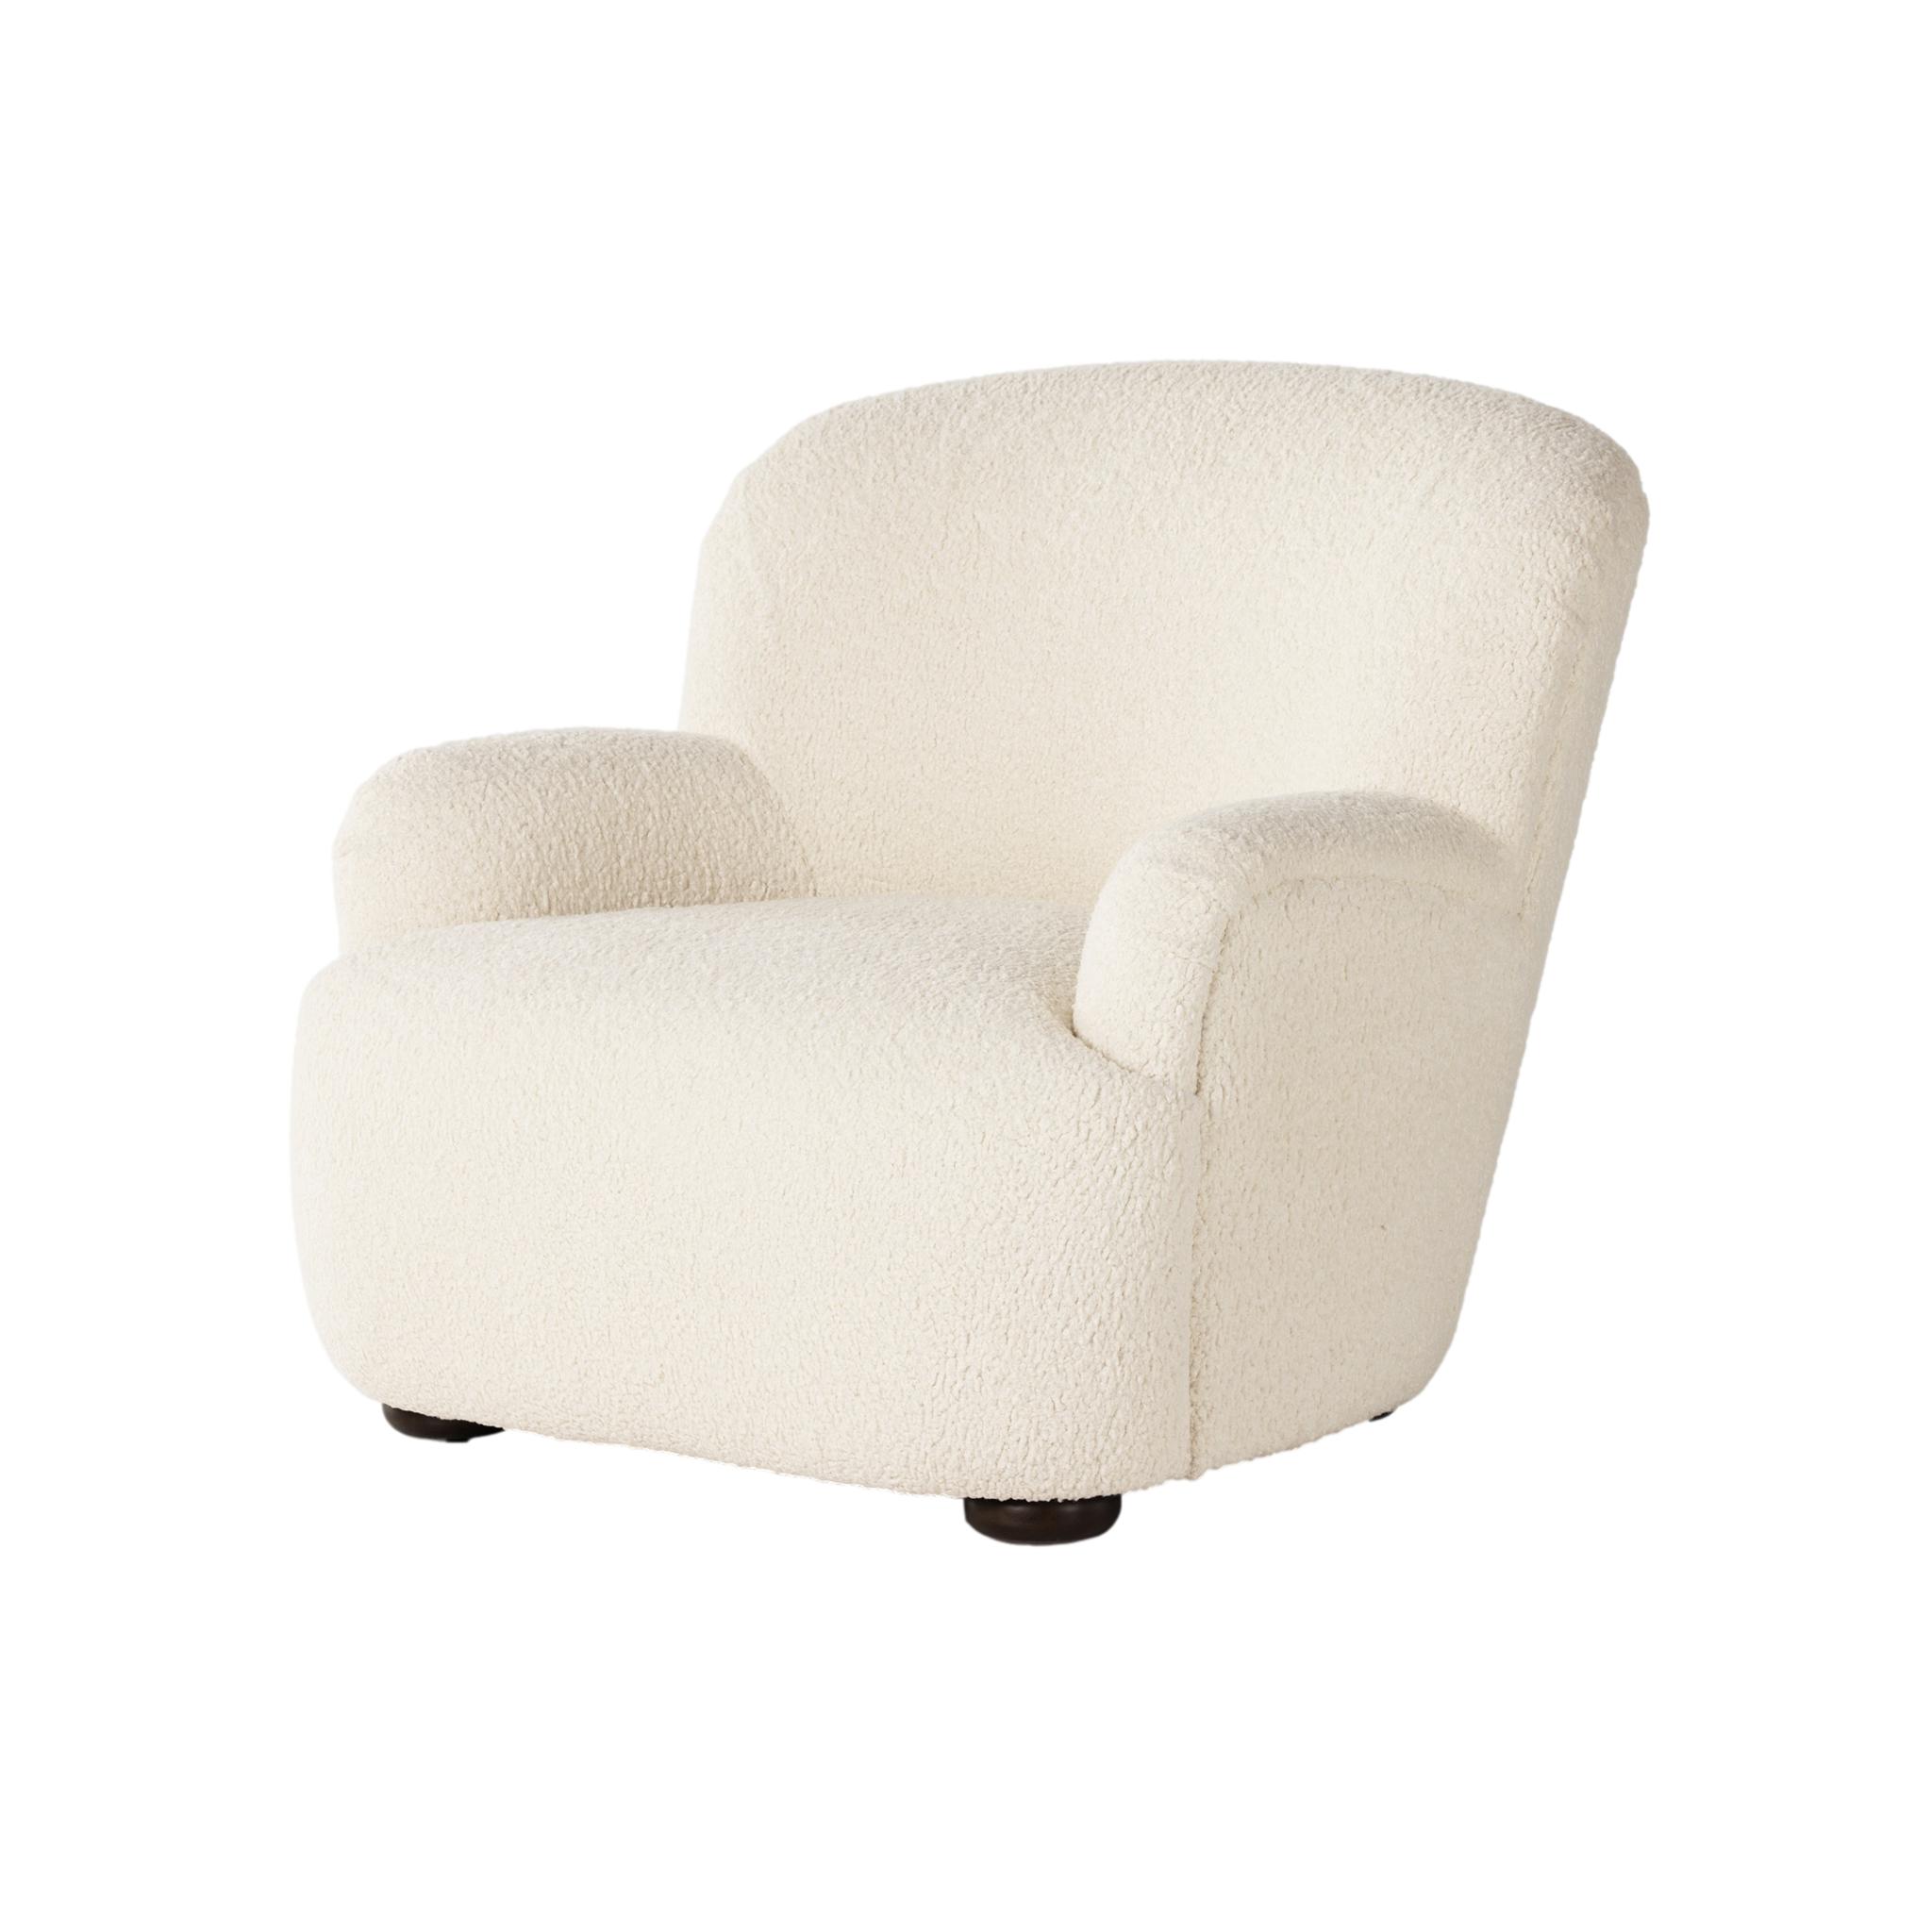 Kadon Chair in Natural